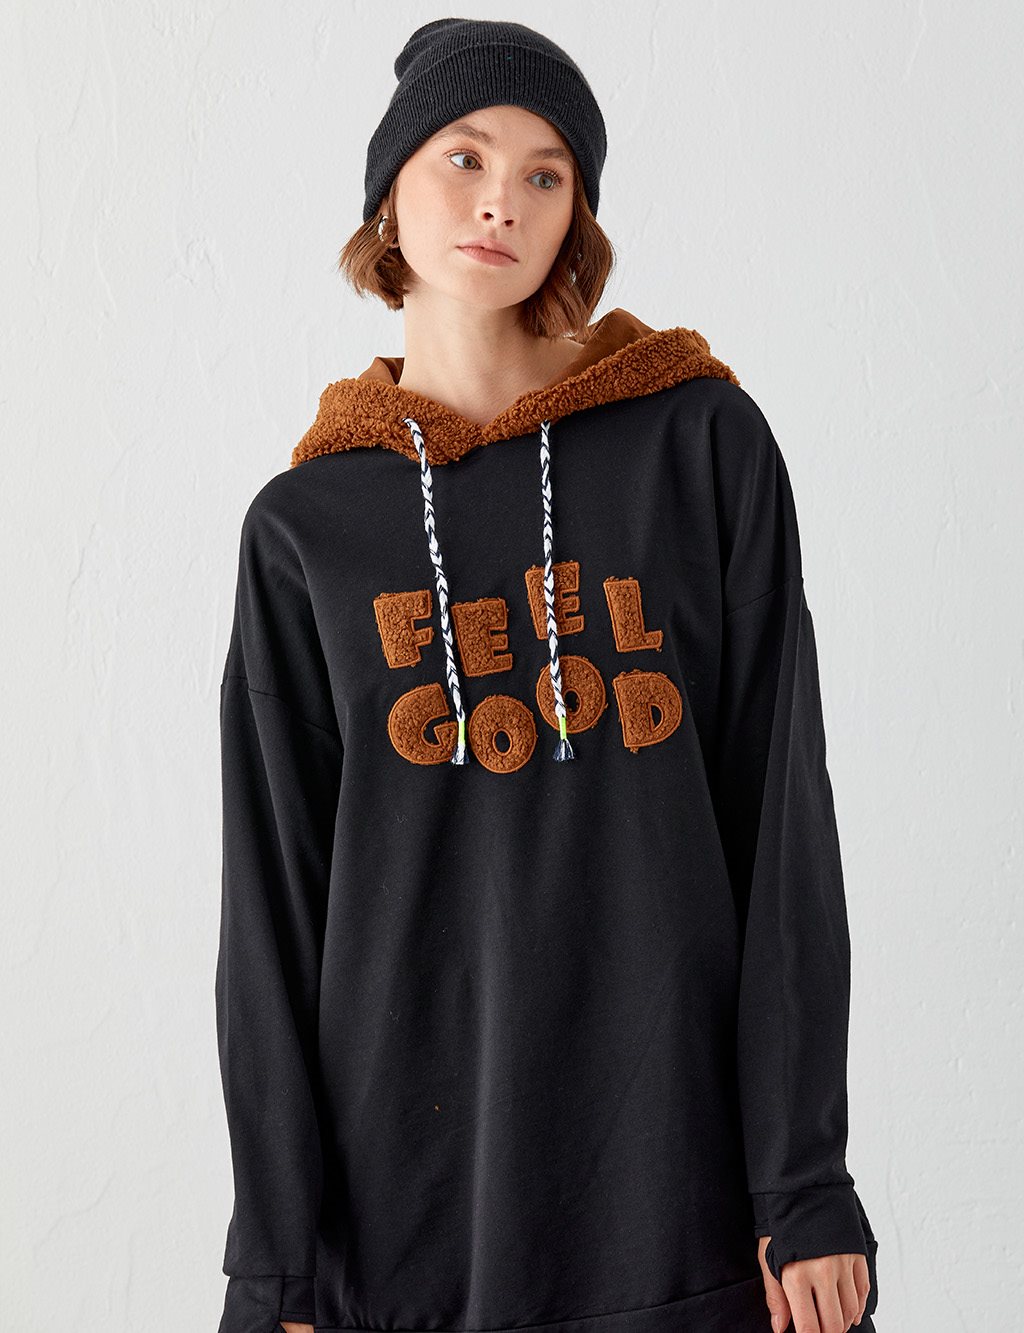 Slogan Detailed Plush Hooded Sweatshirt Black-Camel